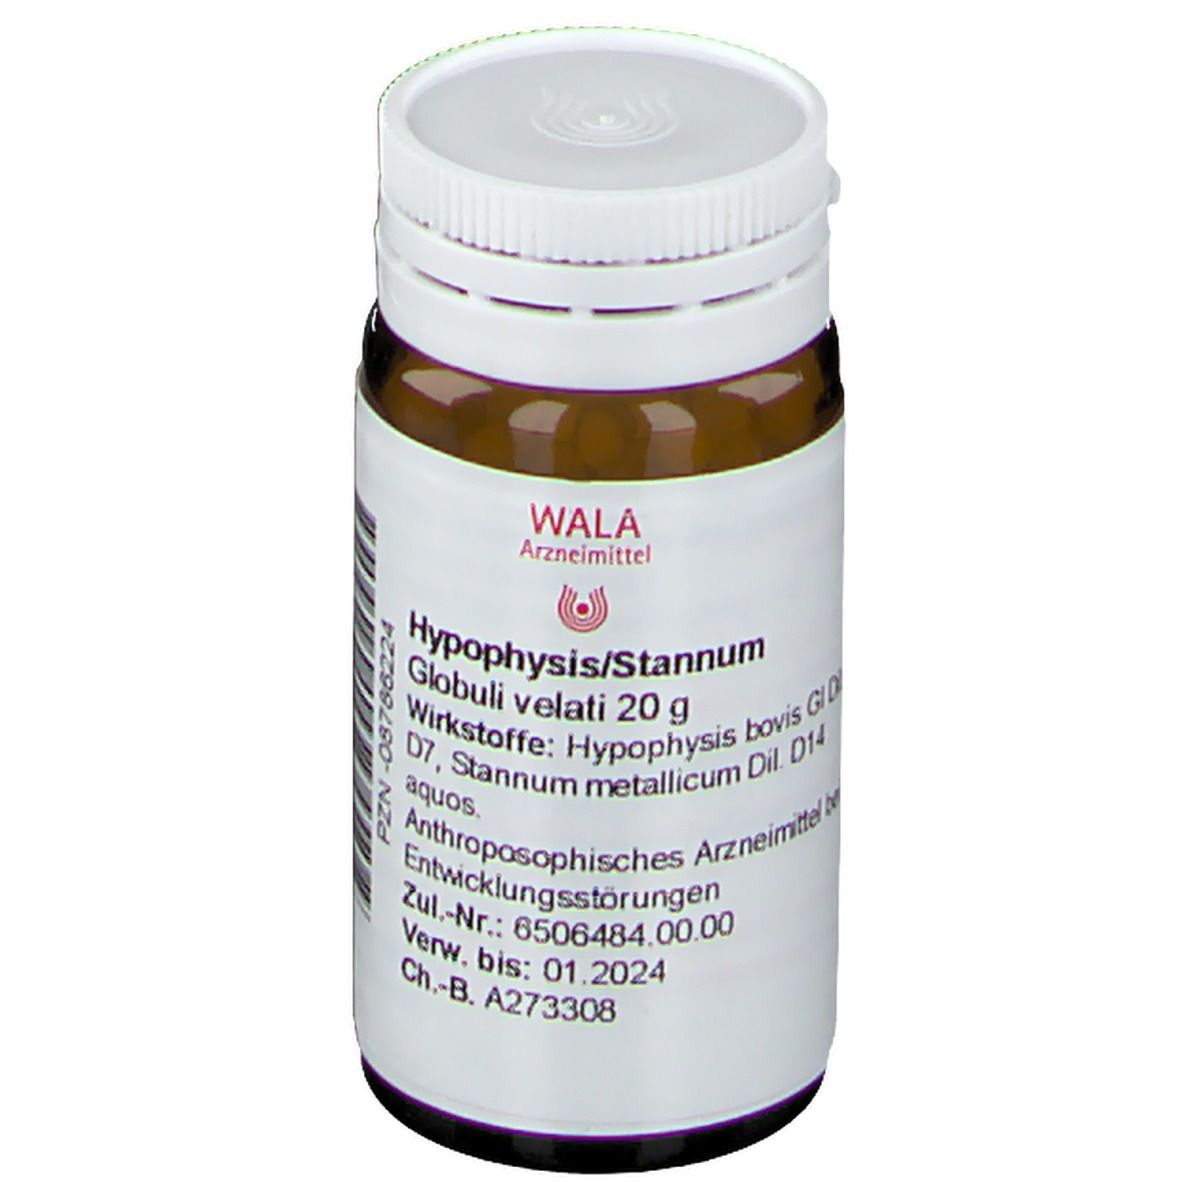 Wala® Hypophysis/Stannum Globuli